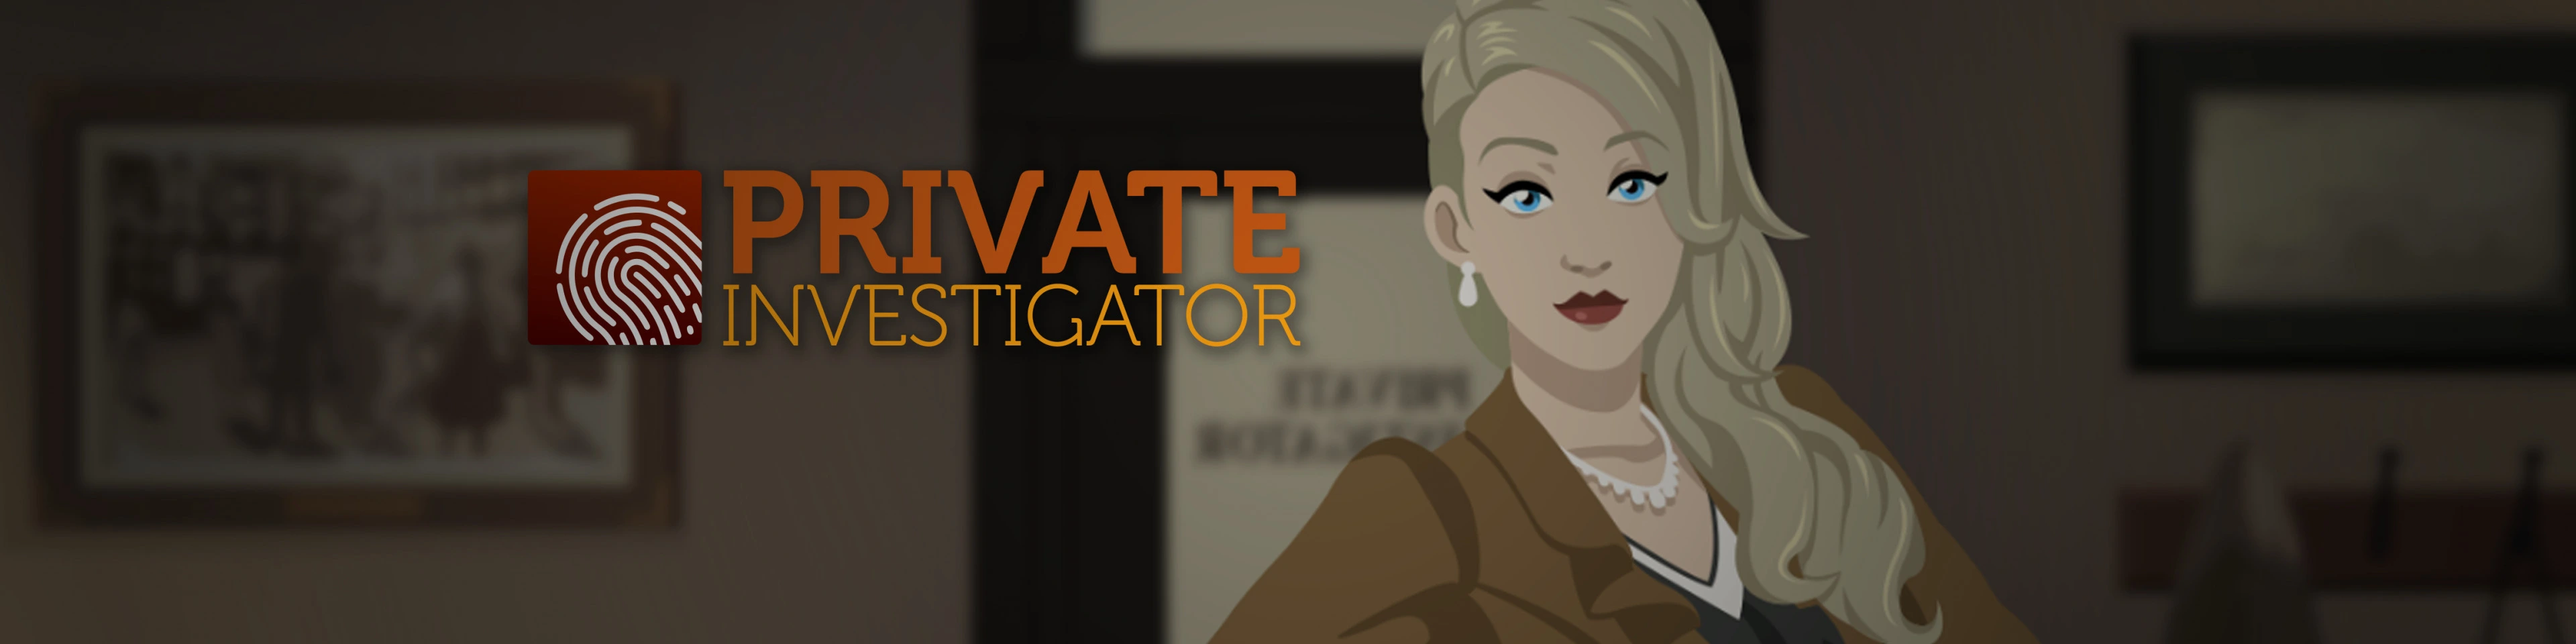 Private Investigator [v1.0] main image